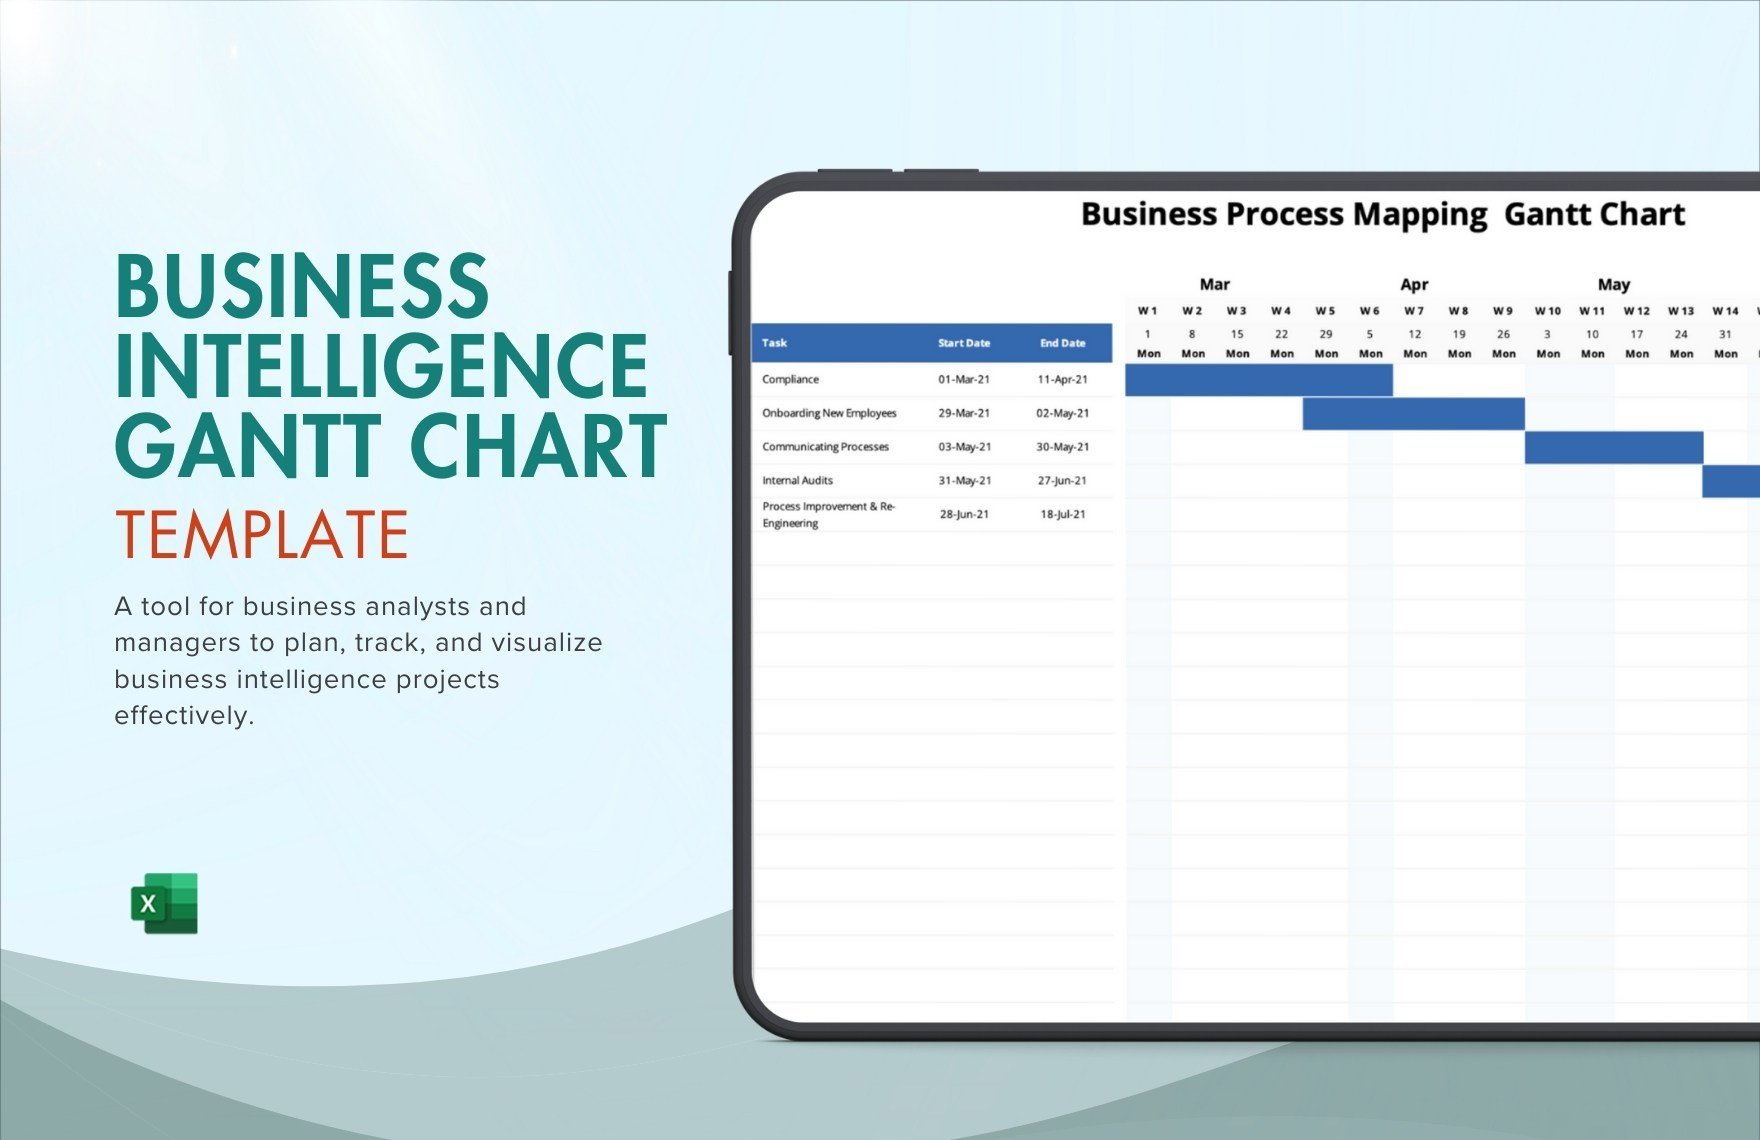 Business Intelligence Gantt Chart Template in Excel